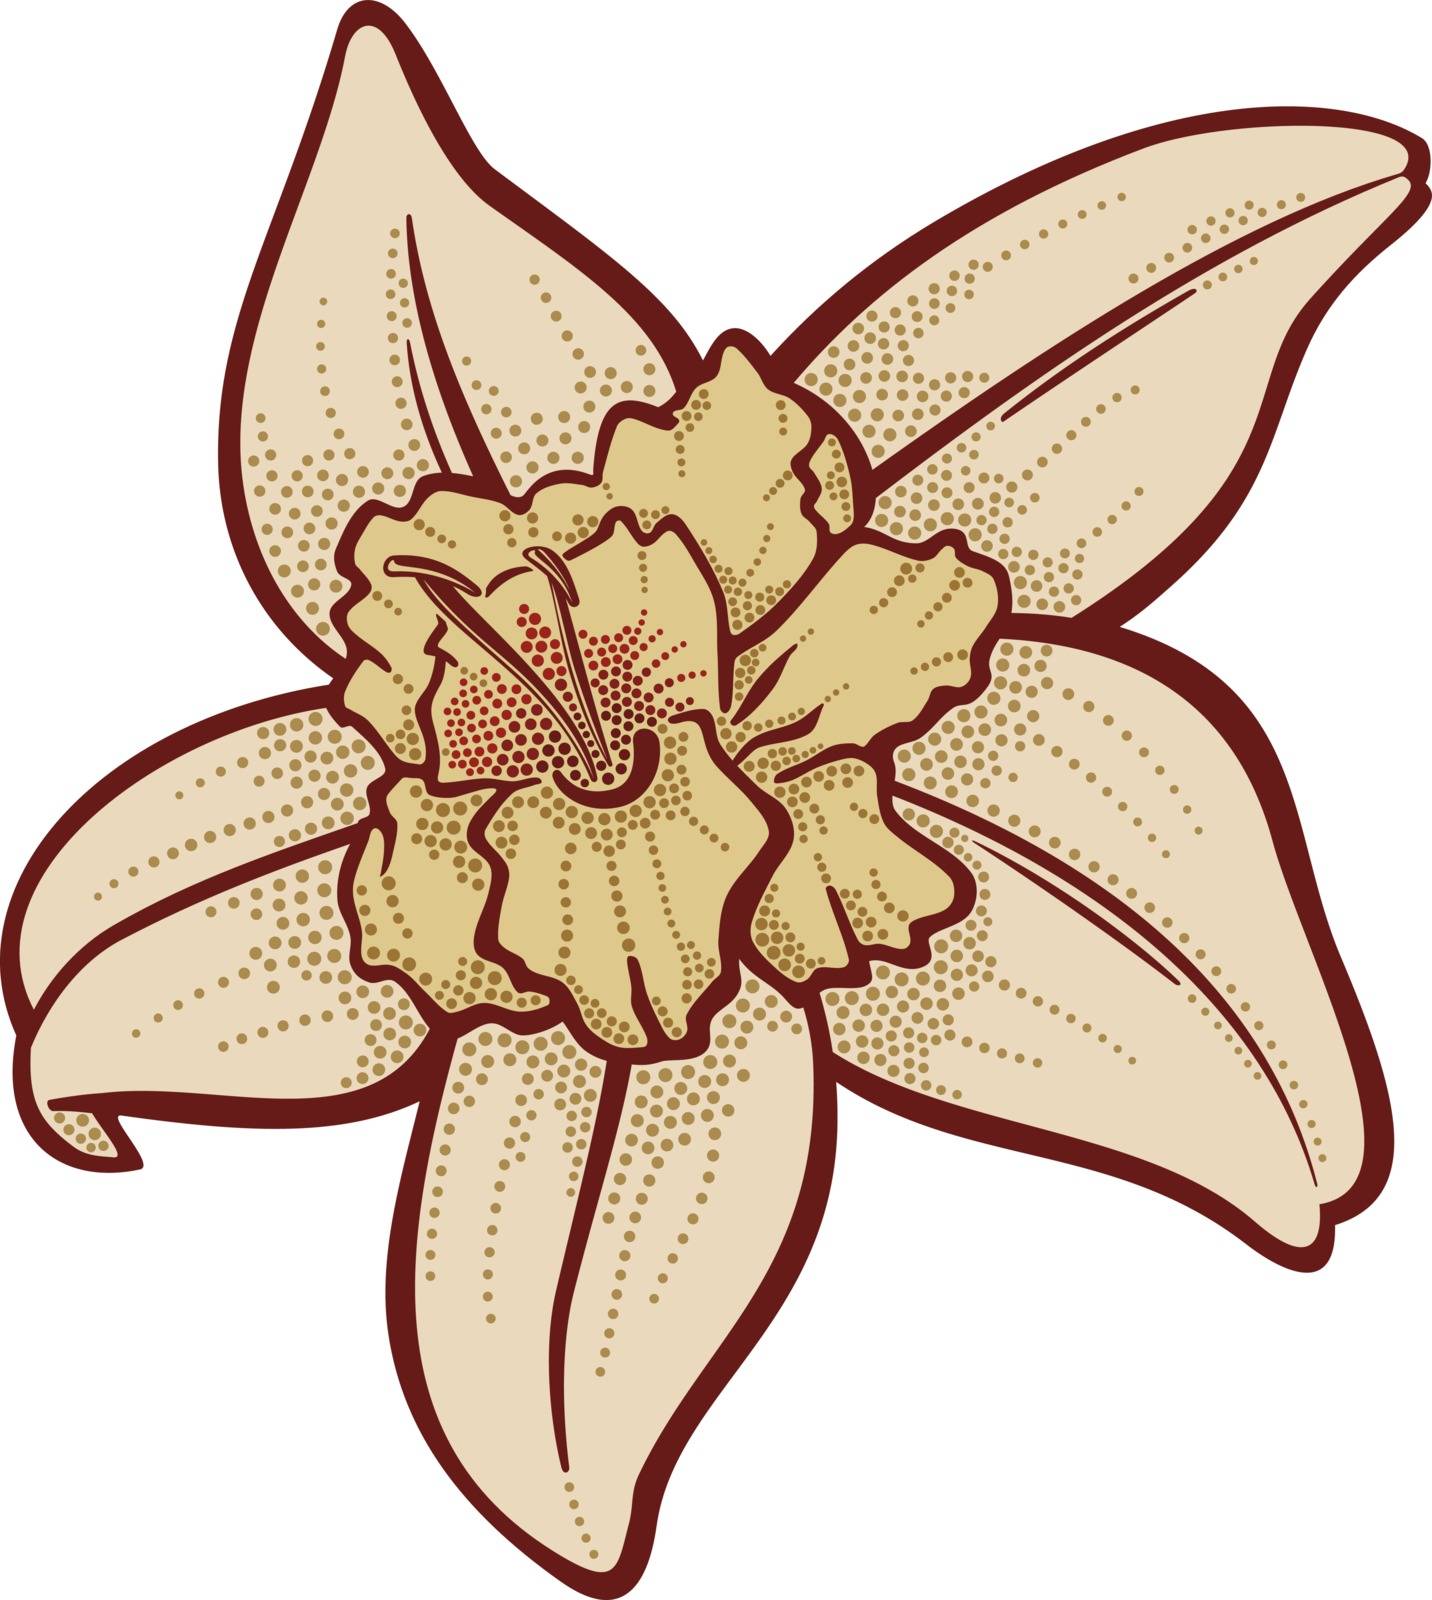 Vanilla flower illustration isolated on white background.